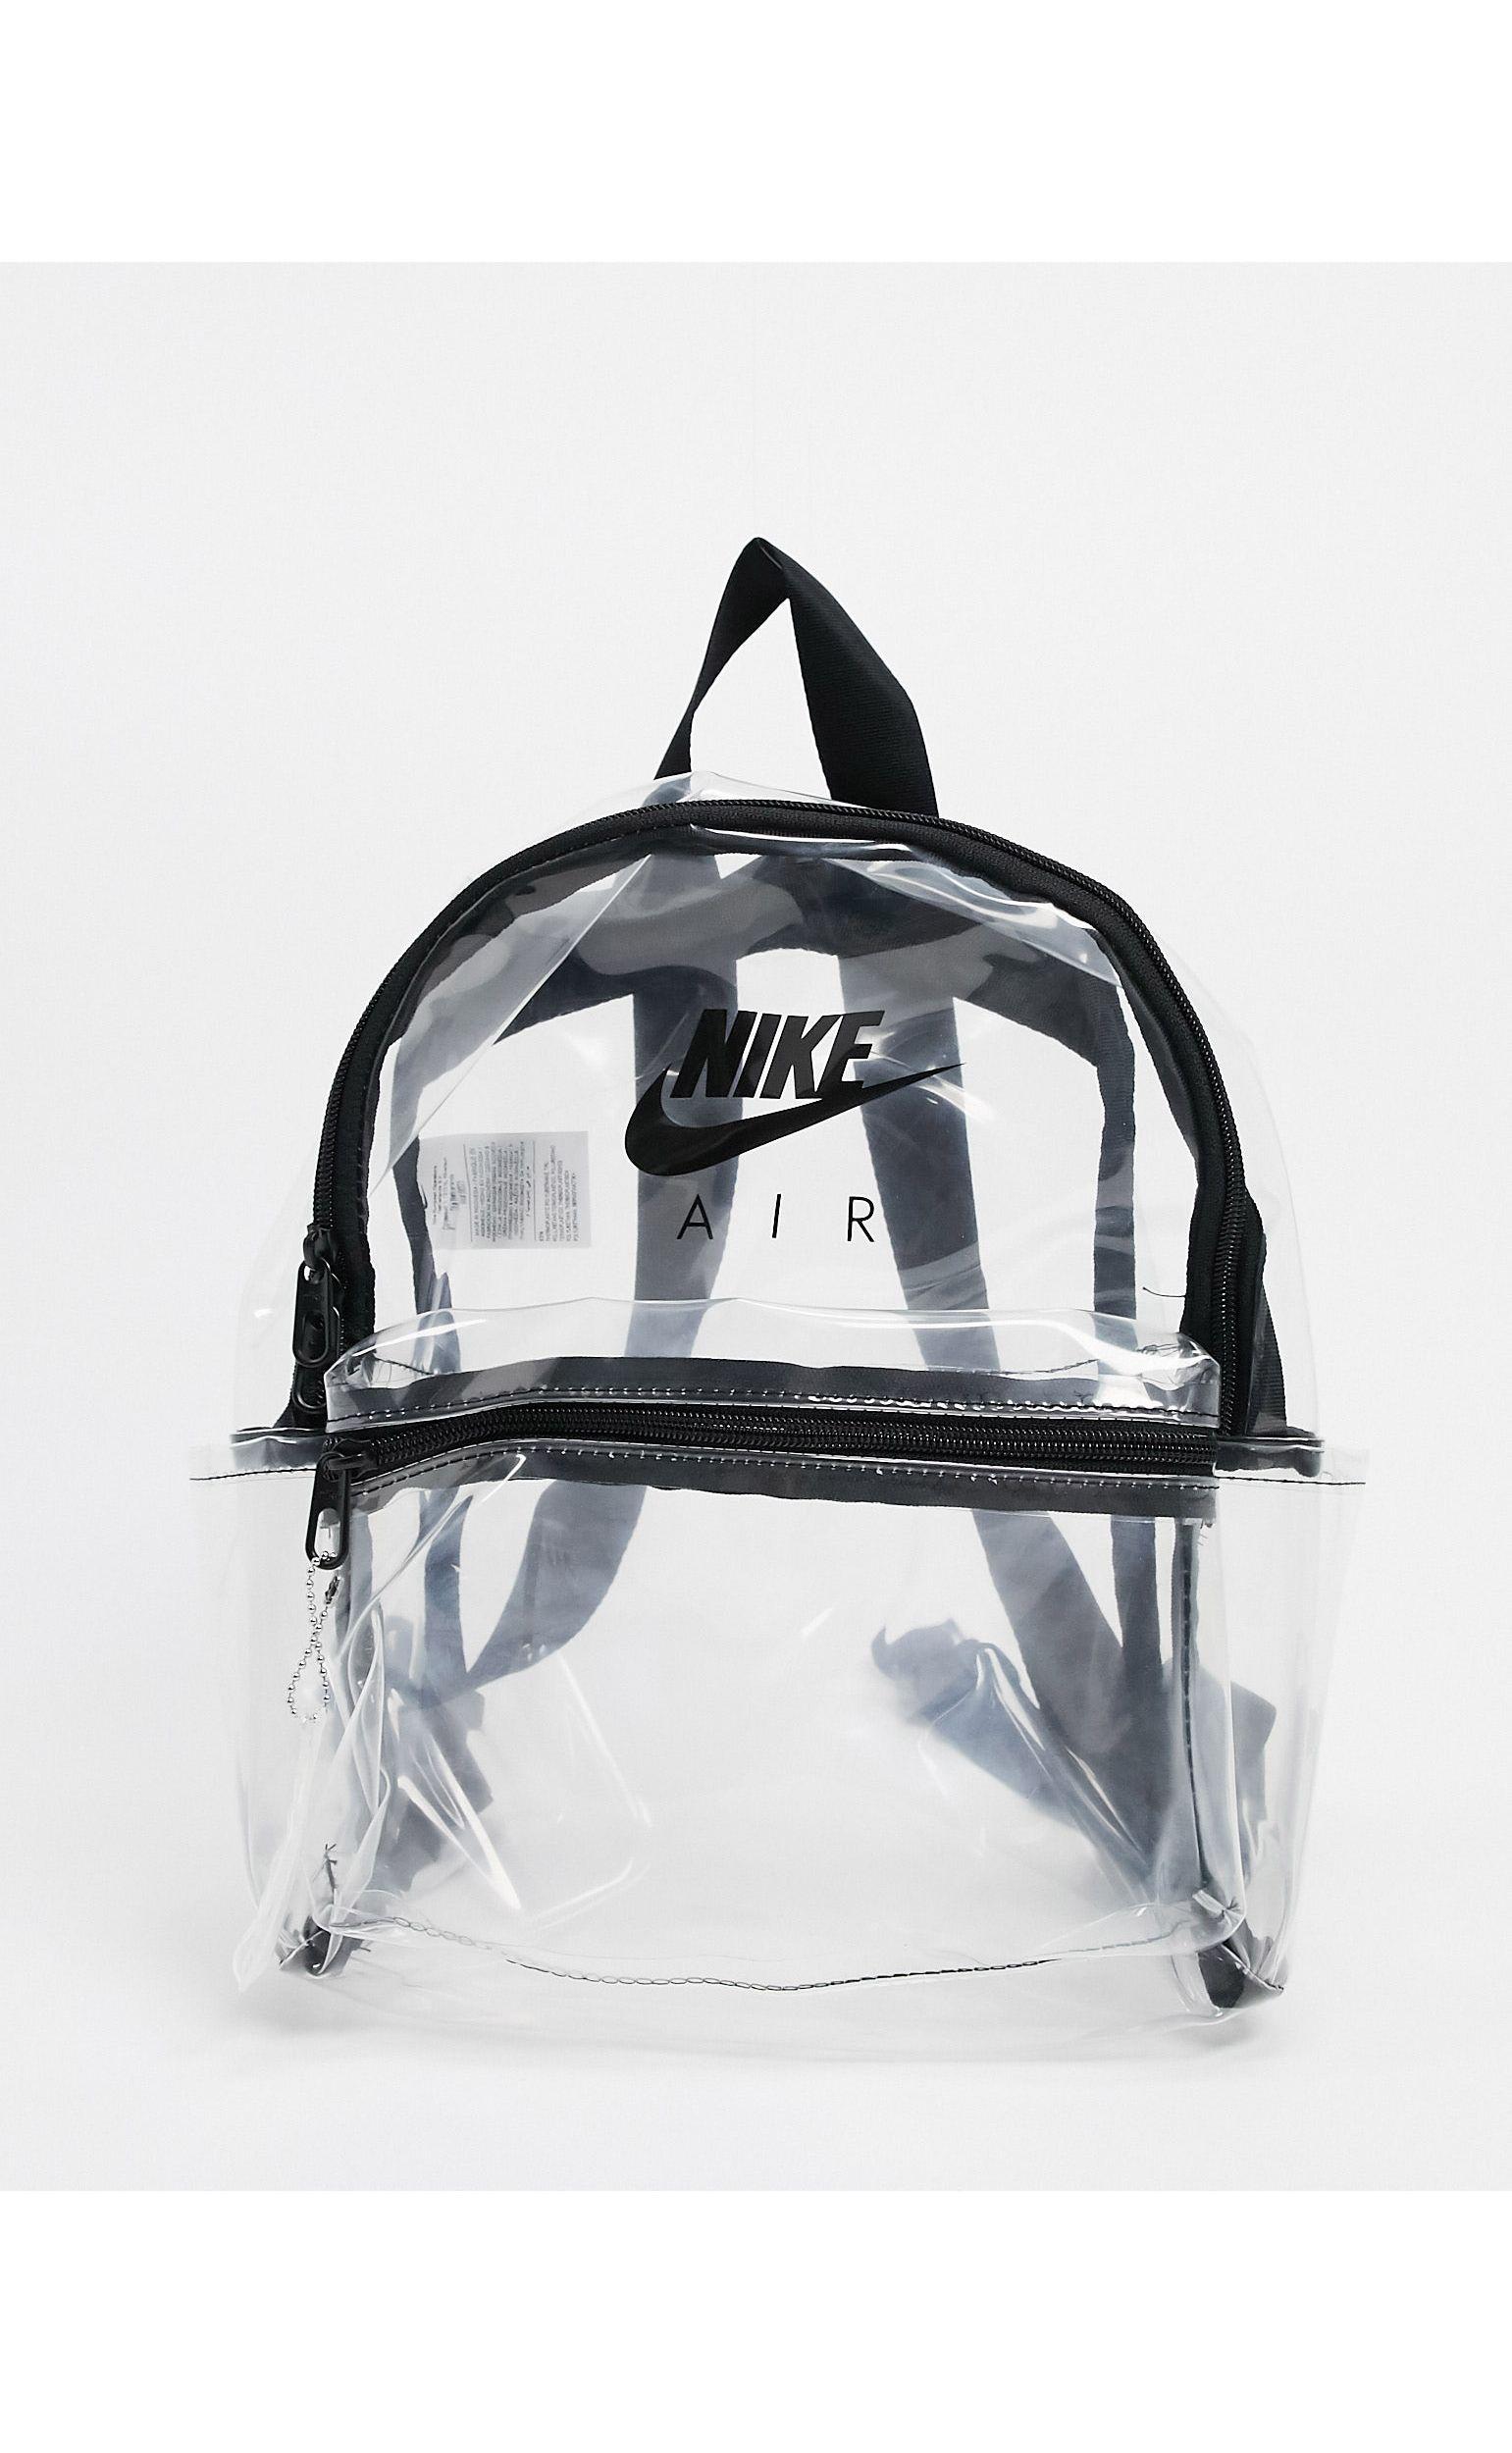 Inocencia Costa Escupir Nike Air Clear Transparent Mini Backpack | Lyst